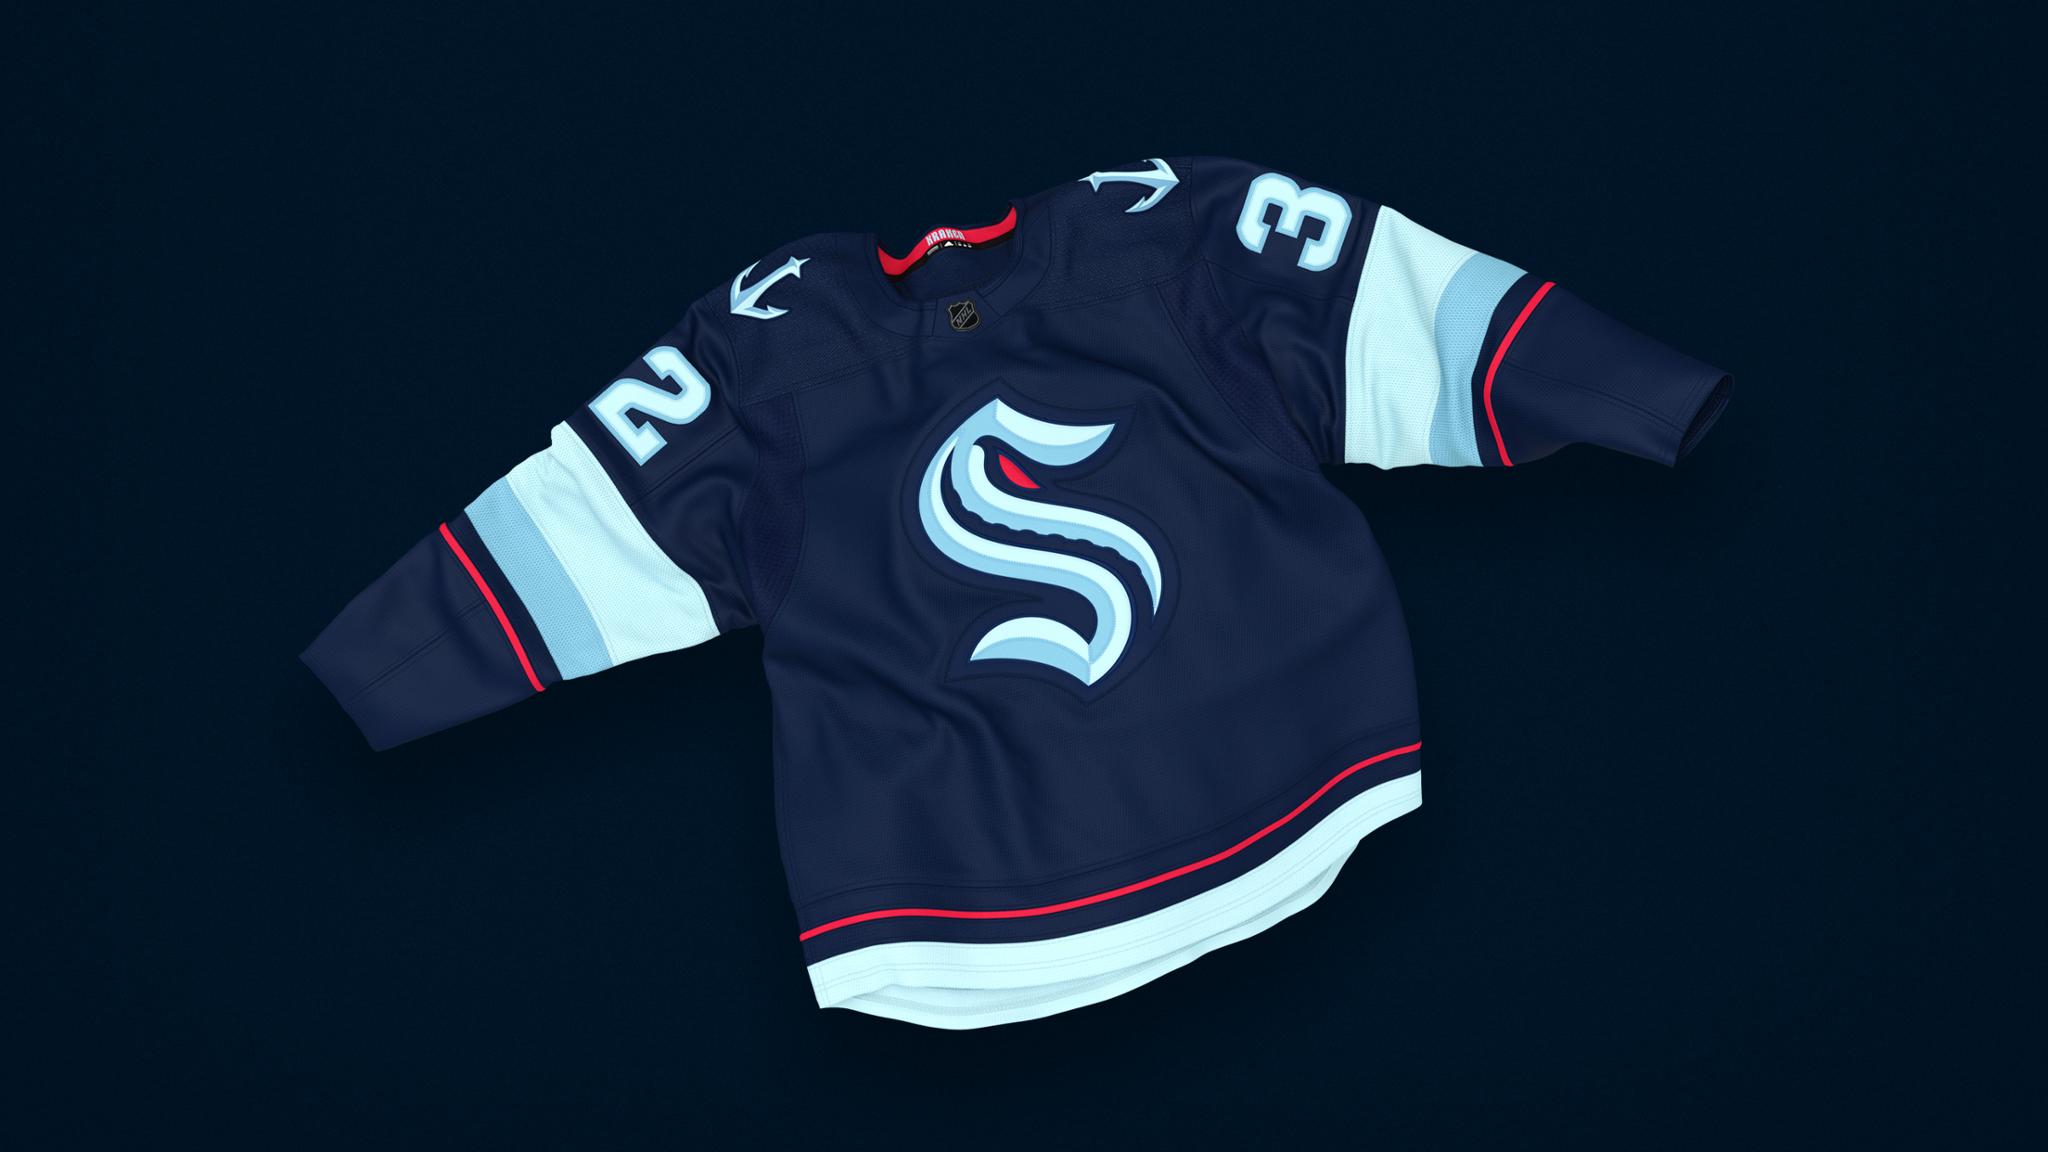 NHL Seattle Kraken Custom Name Number Home Jersey 2021 T-Shirt